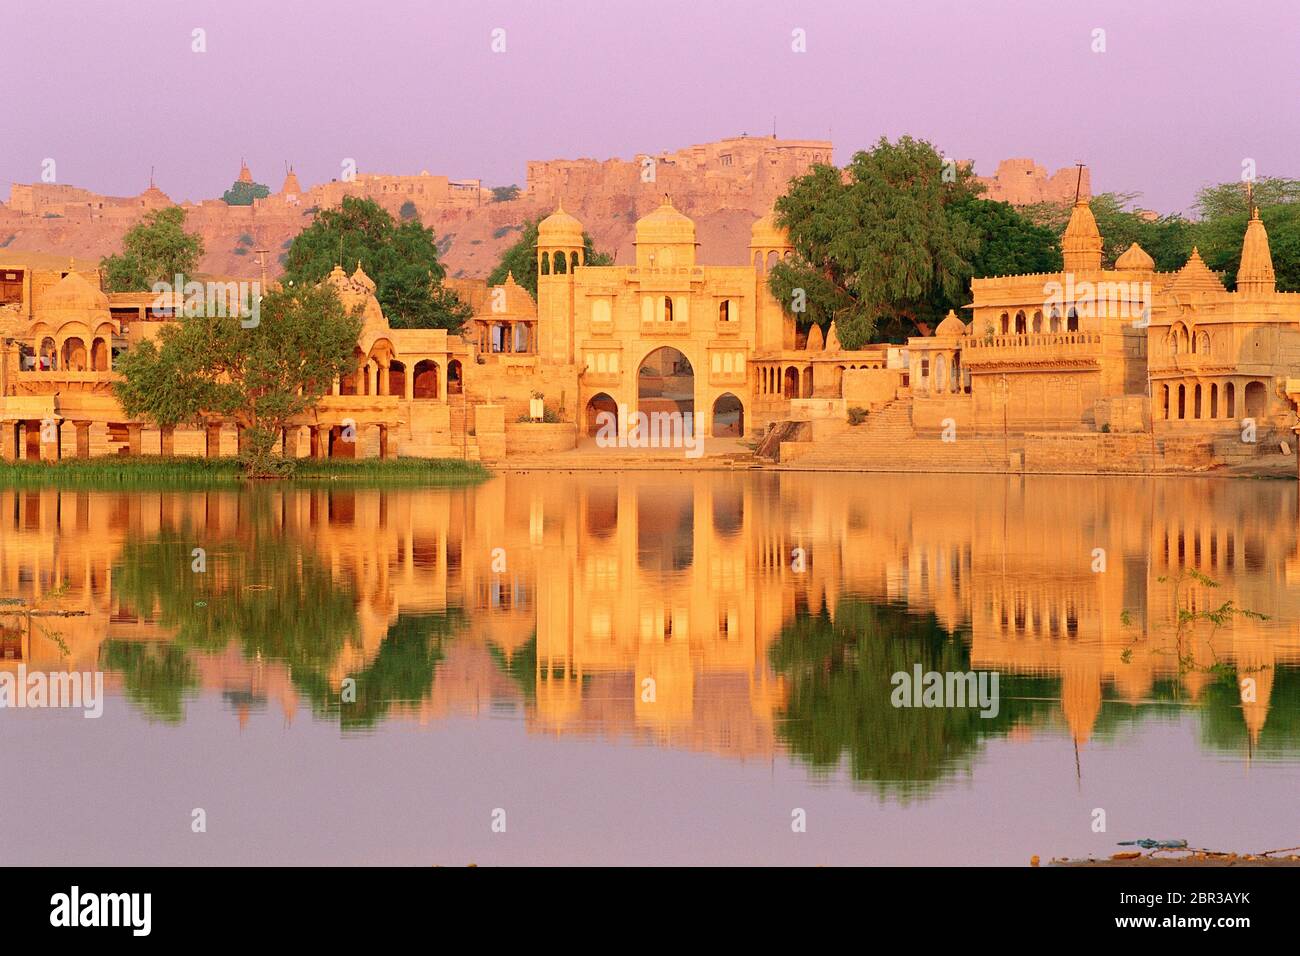 Historic Gateway on the shores of Gadi Sagar Lake with Jaisalmer Fort in the background, Jaisalmer, Rajasthan, India Stock Photo